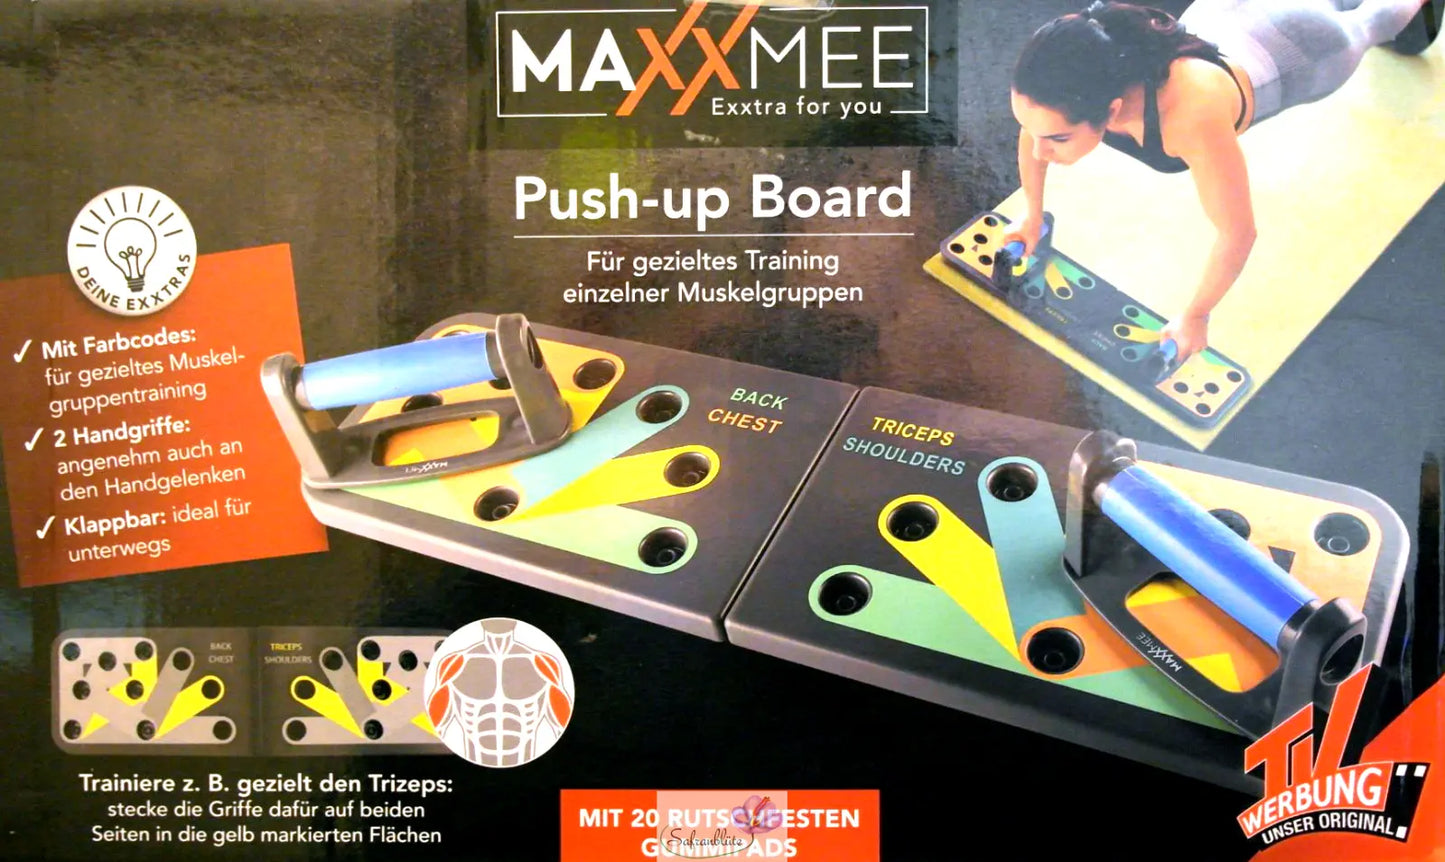 Maxxmee Push-up Board